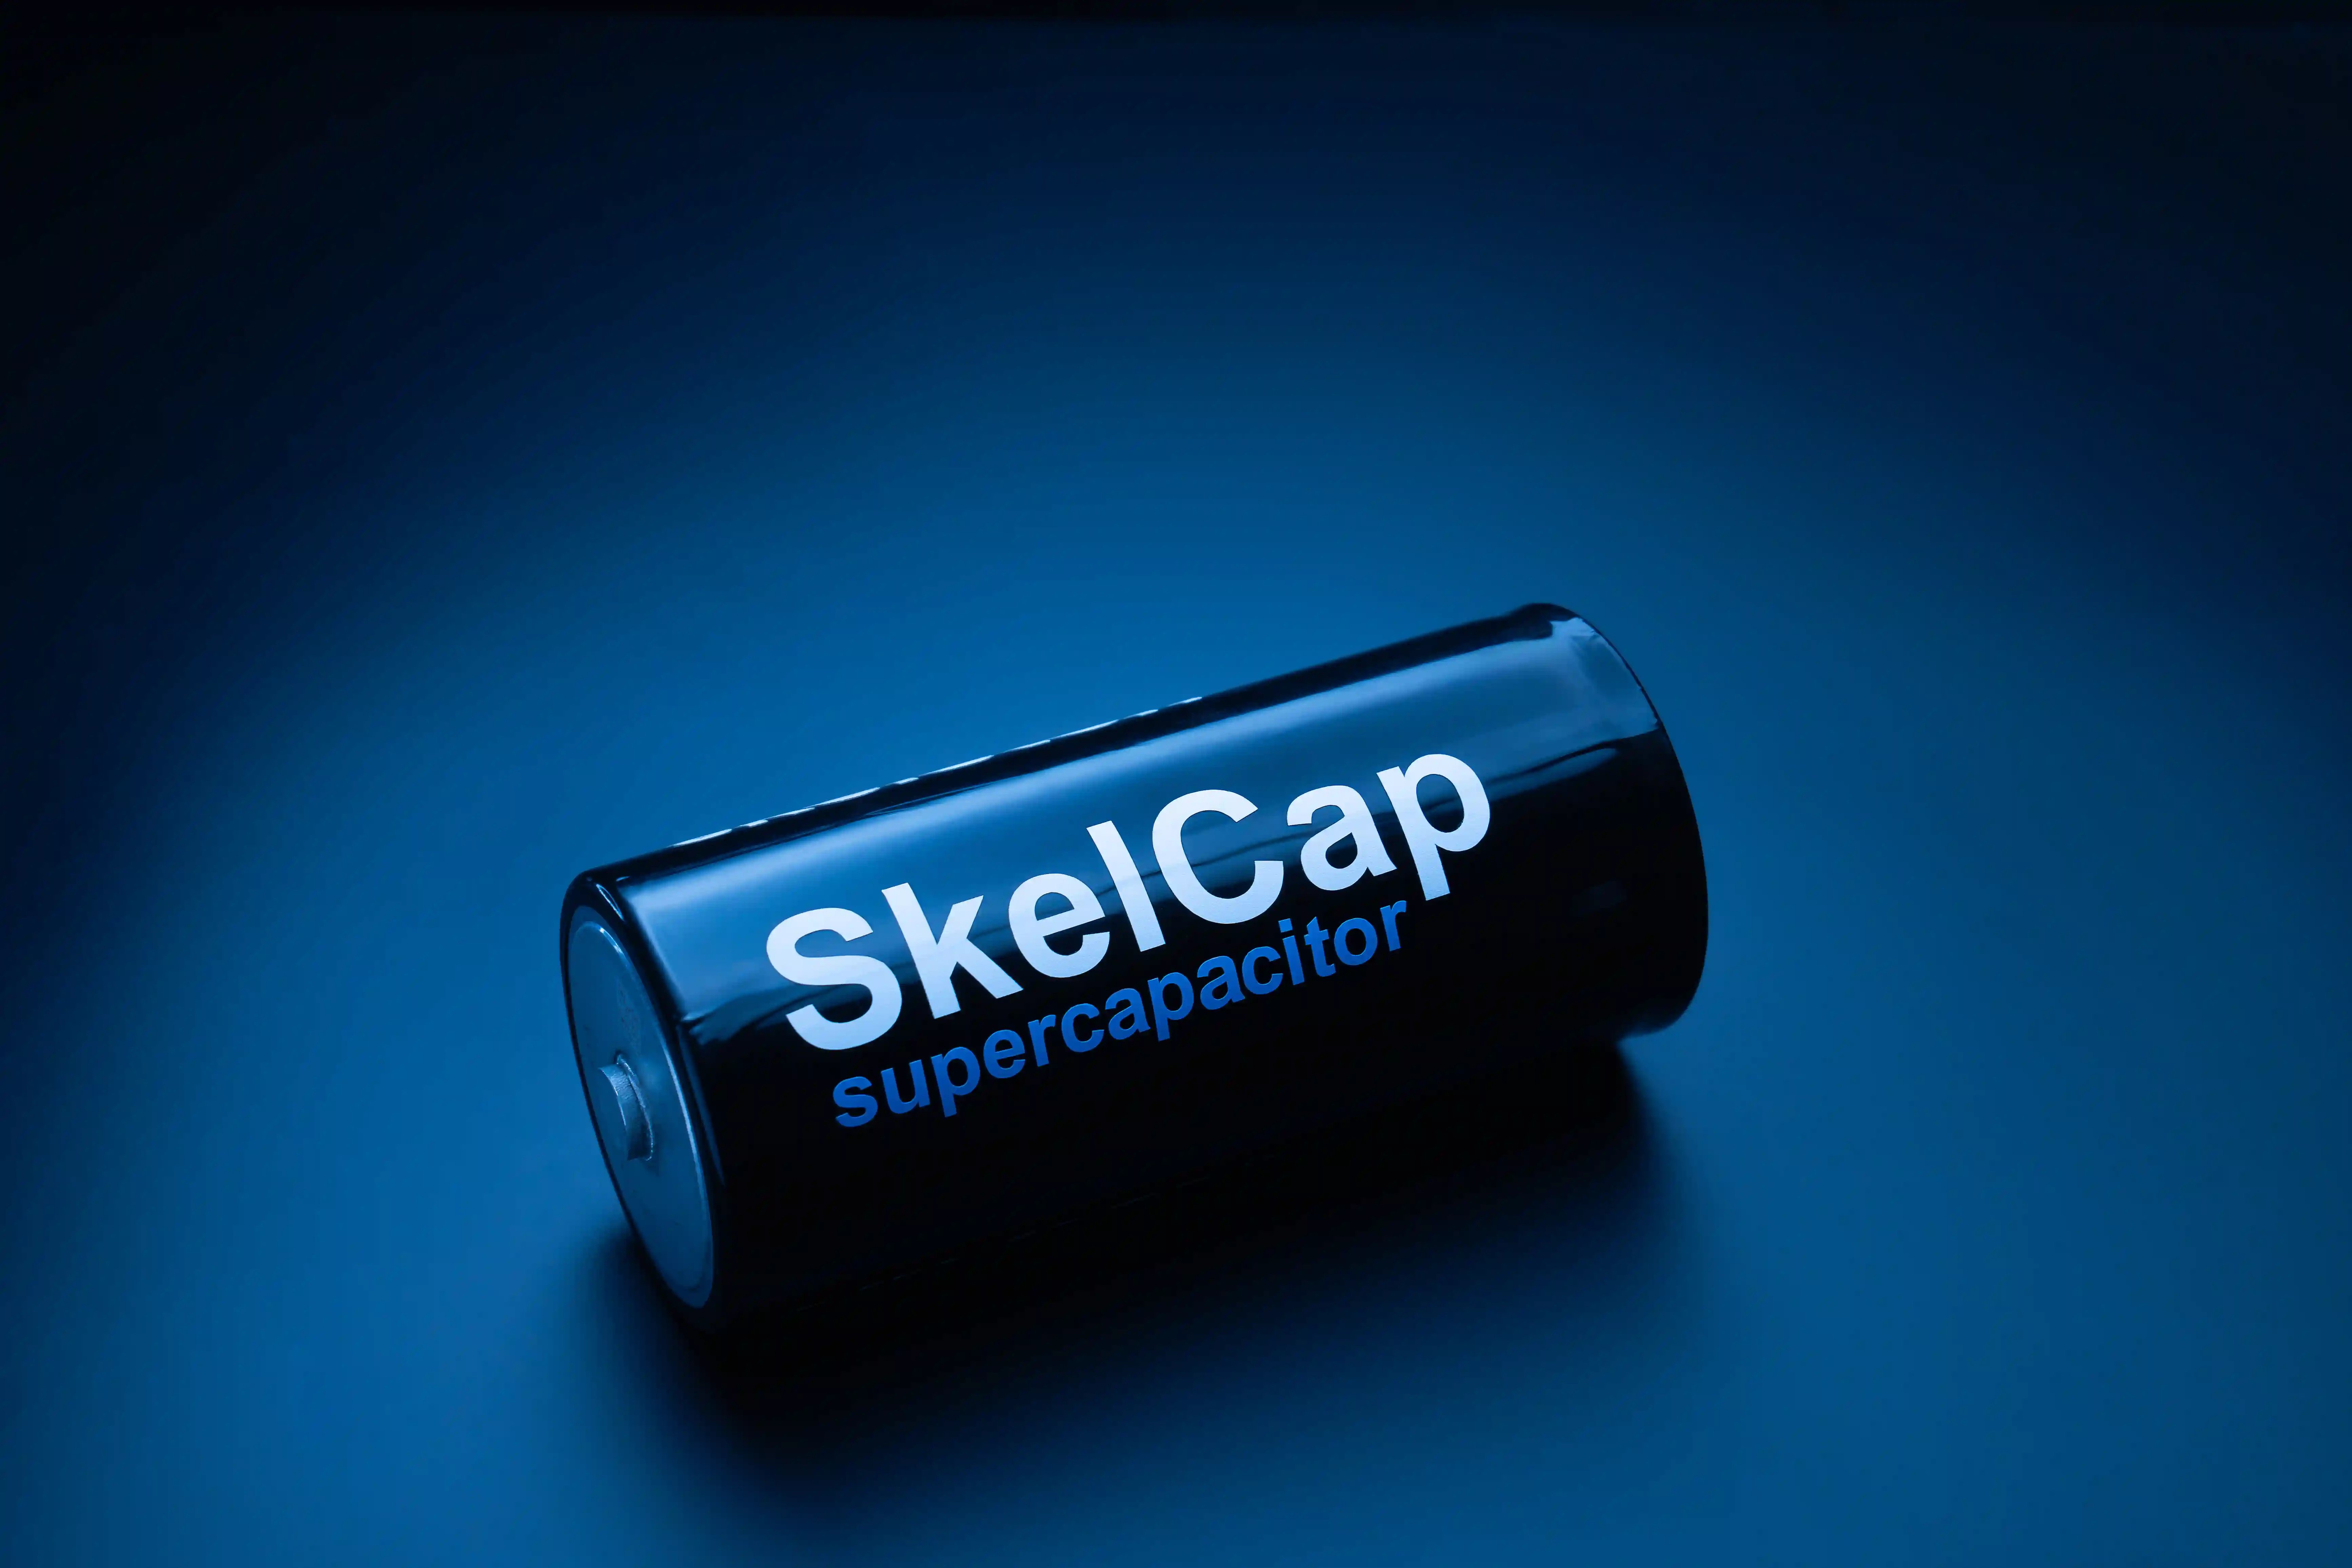 Skeleton supercapacitor SkelCap